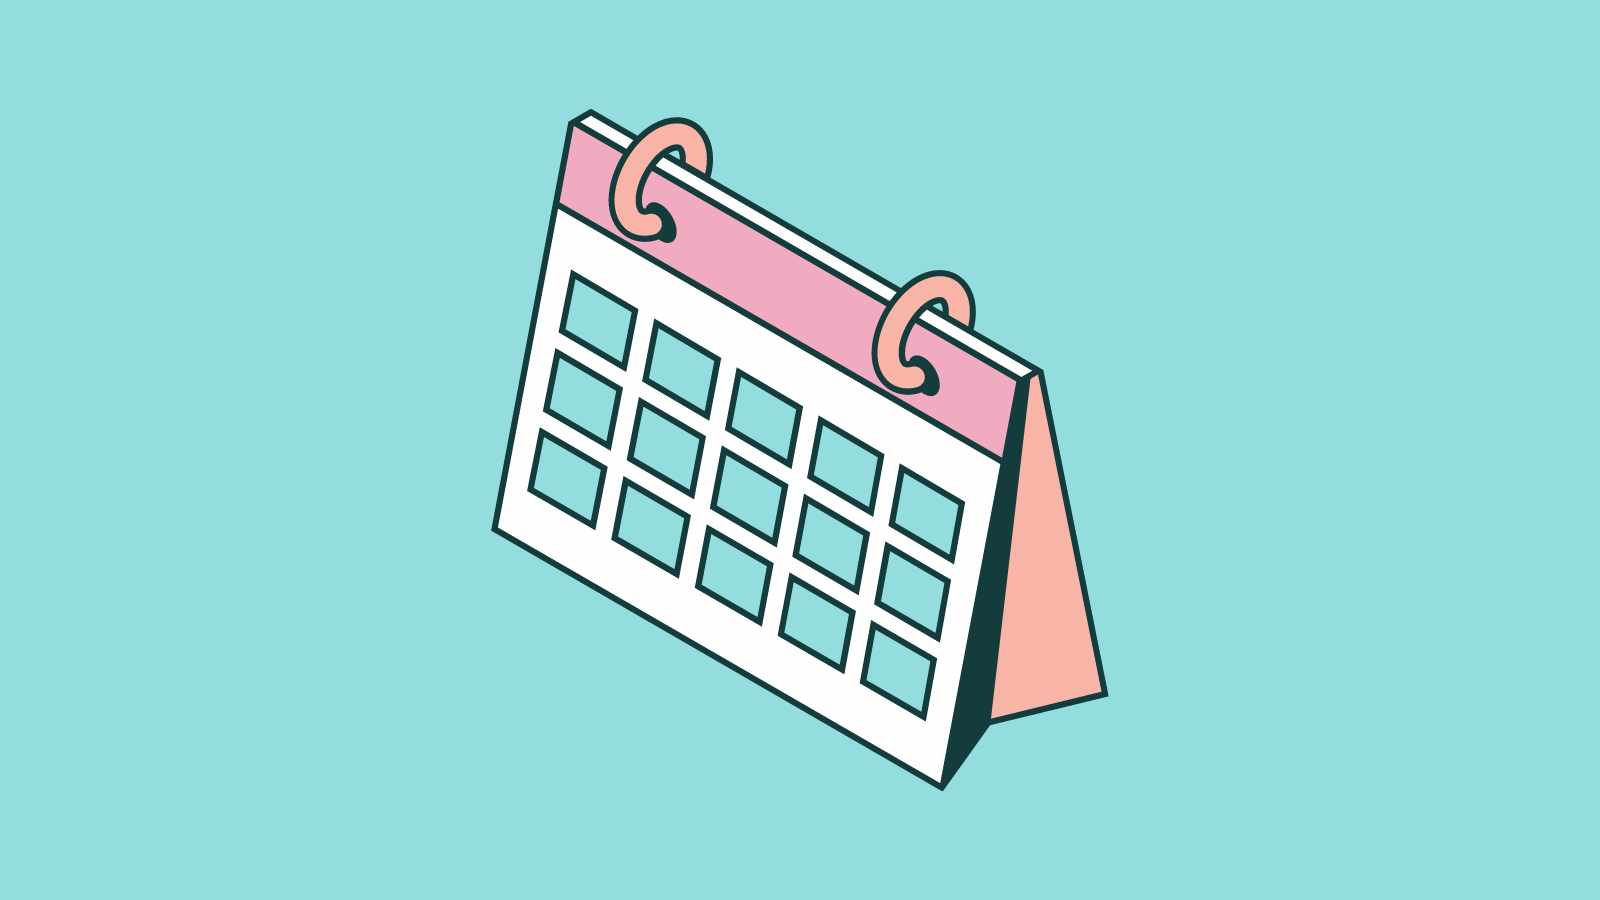 An illustration of a desk calendar